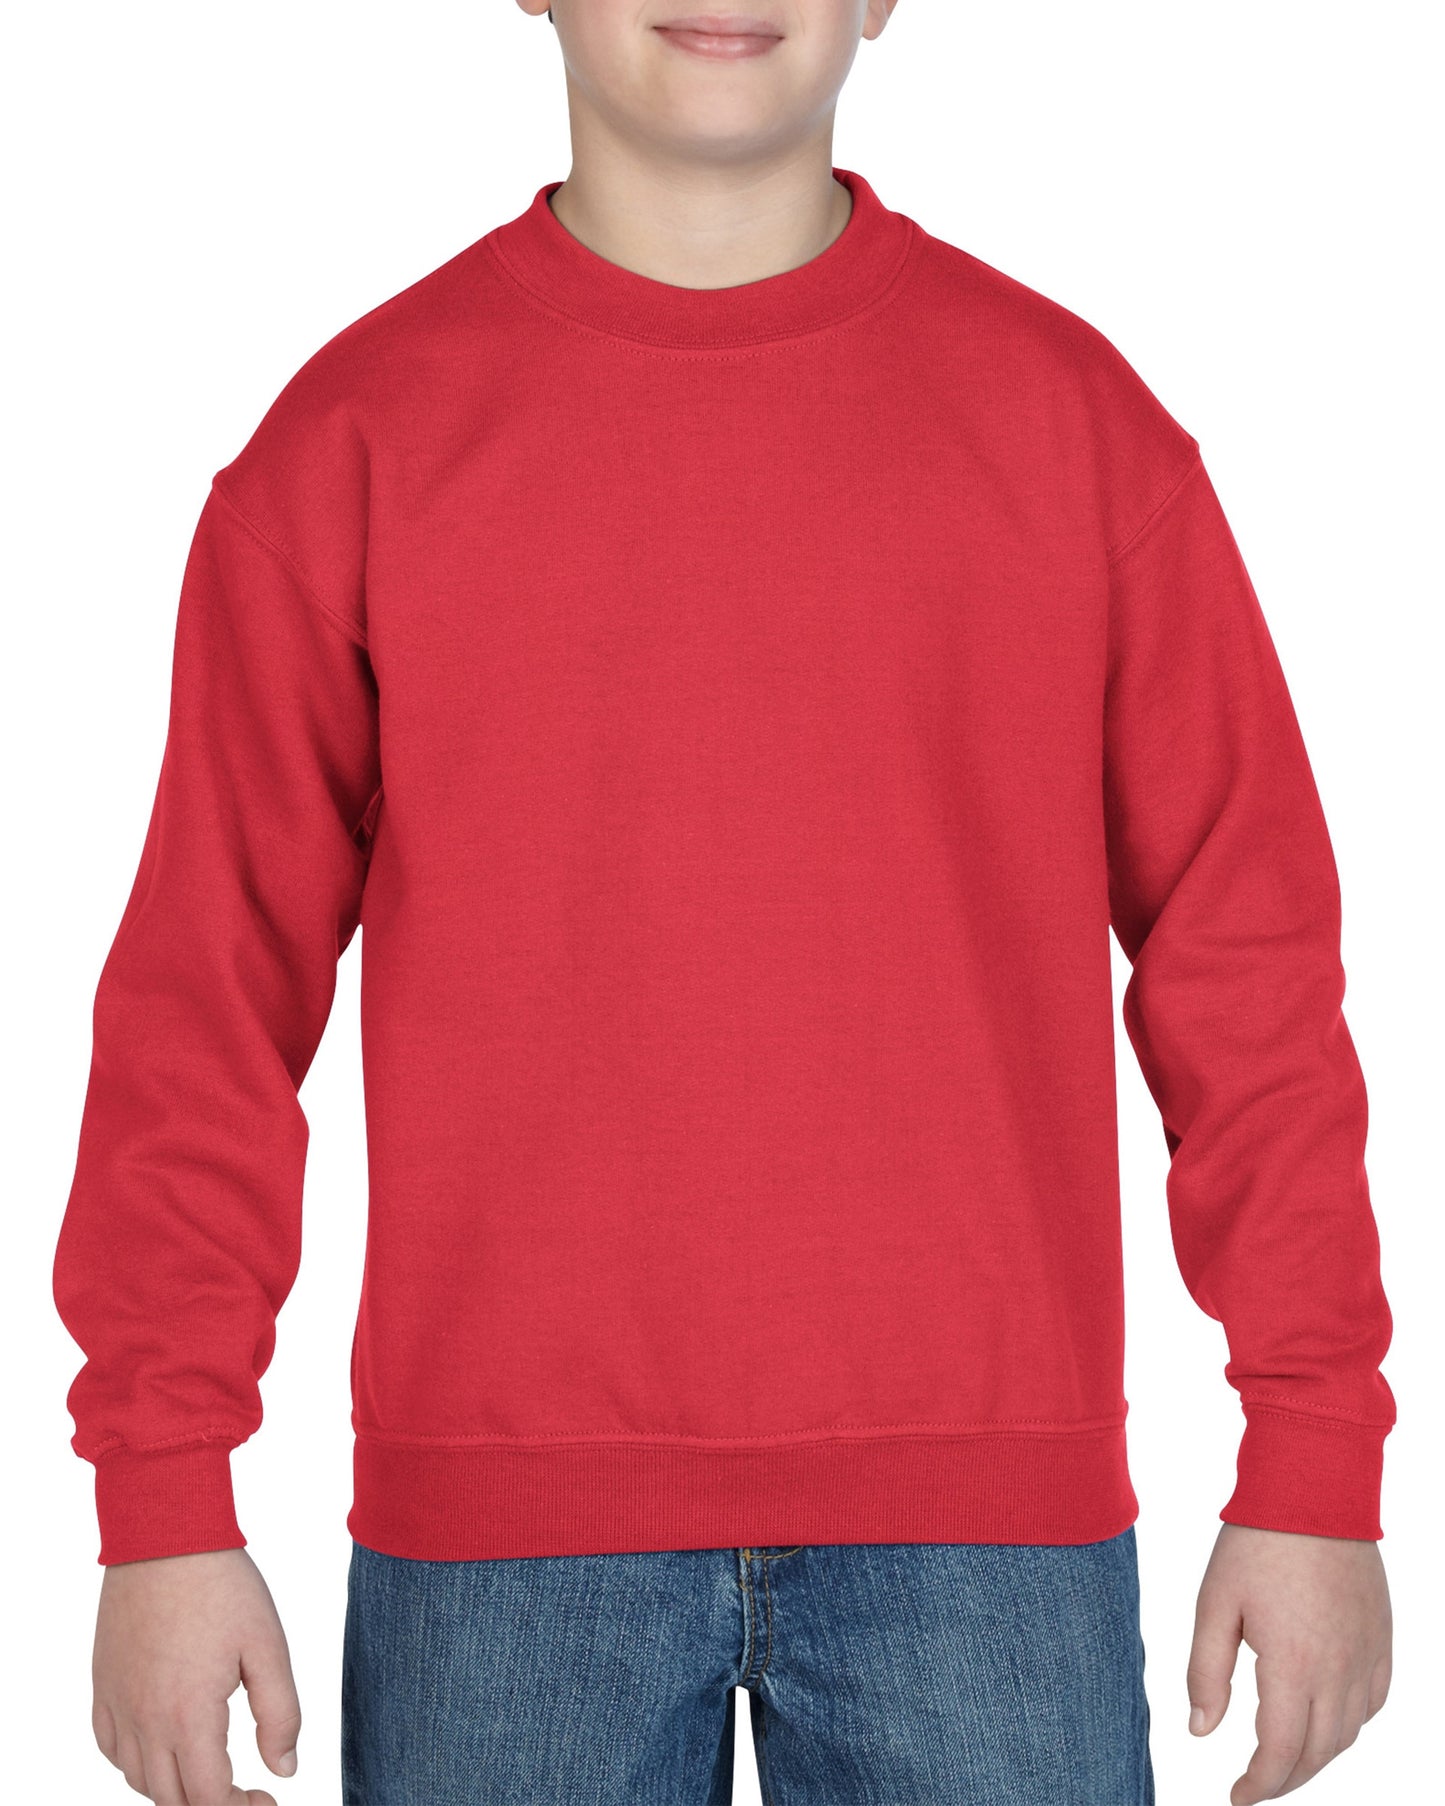 18000B Gildan Youth Crewneck Sweatshirt